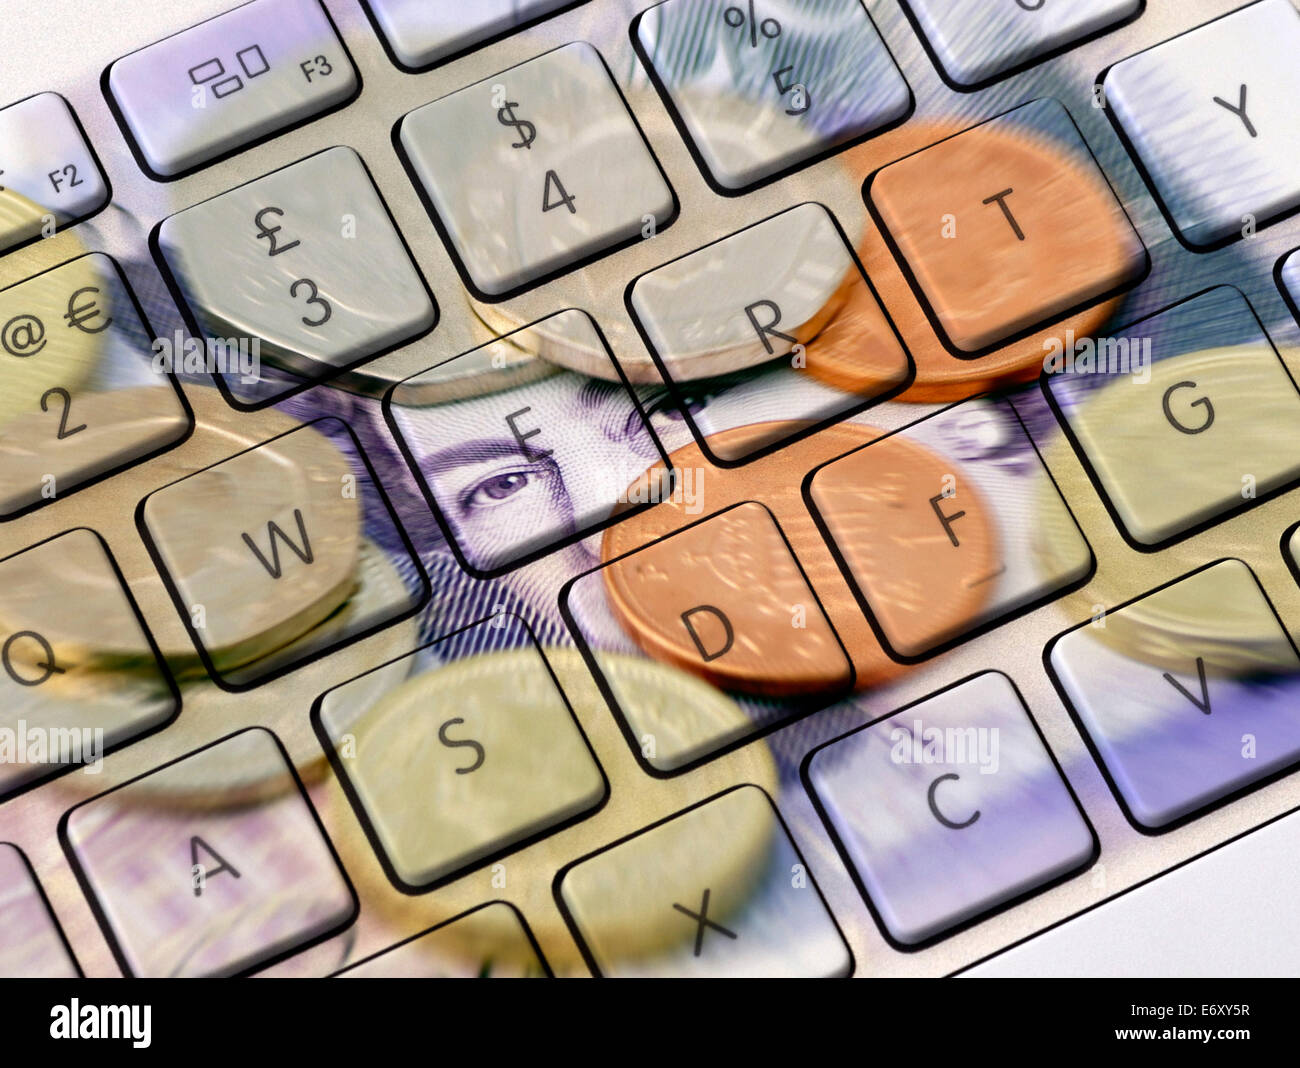 Closeup of computer keyboard overlaid with photo of UK money Stock Photo